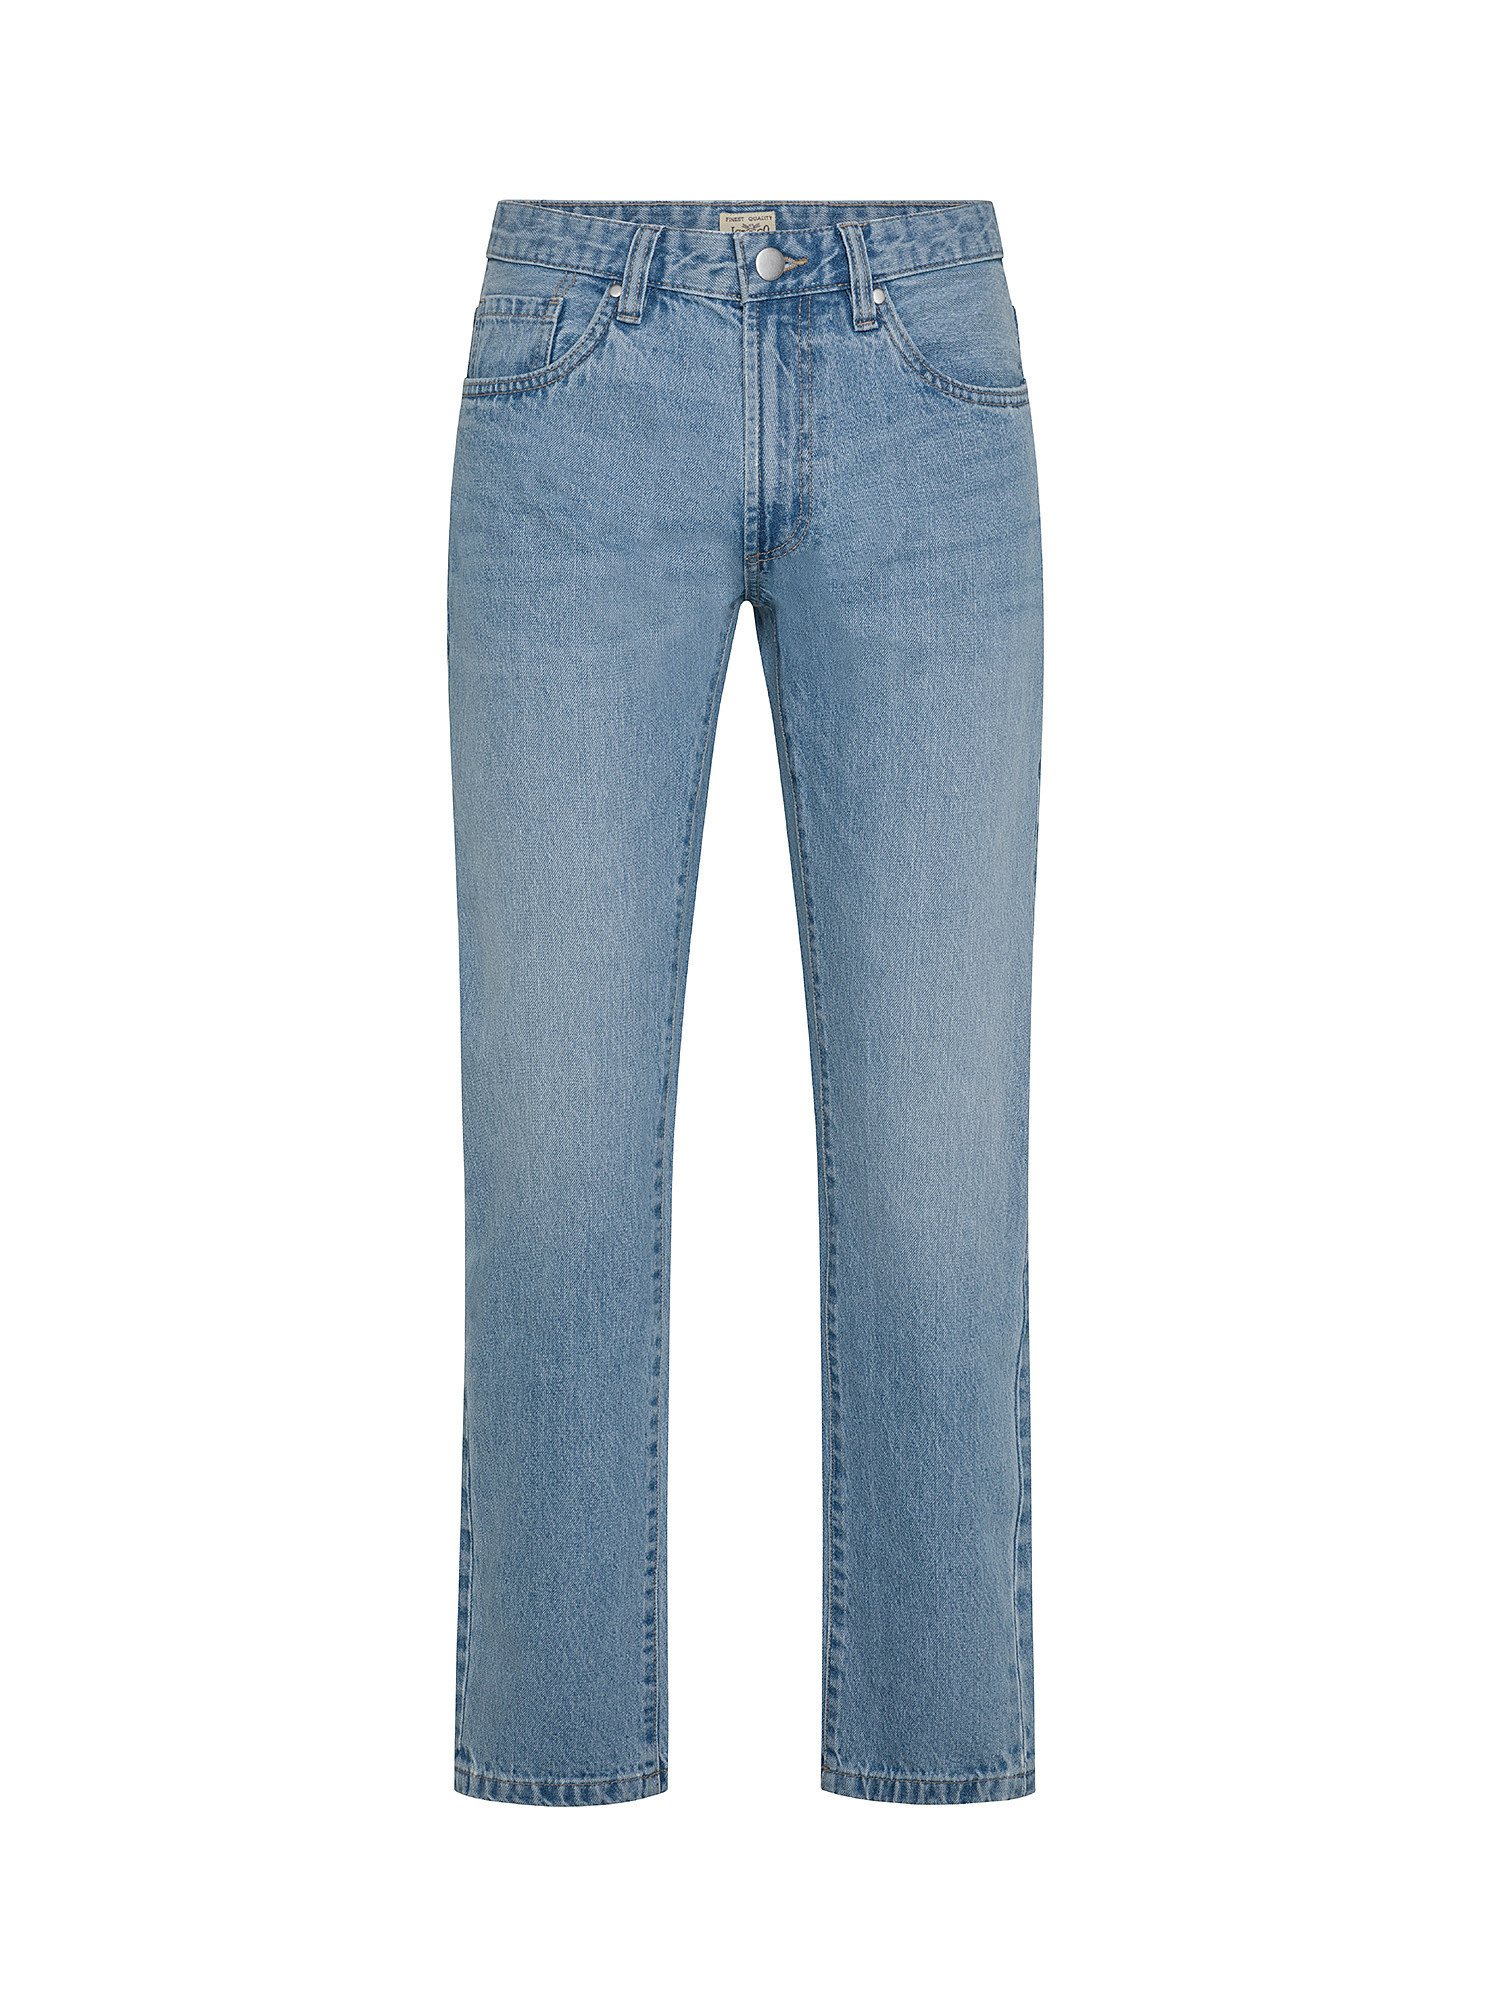 JCT - Jeans cinque tasche in puro cotone, Denim, large image number 0